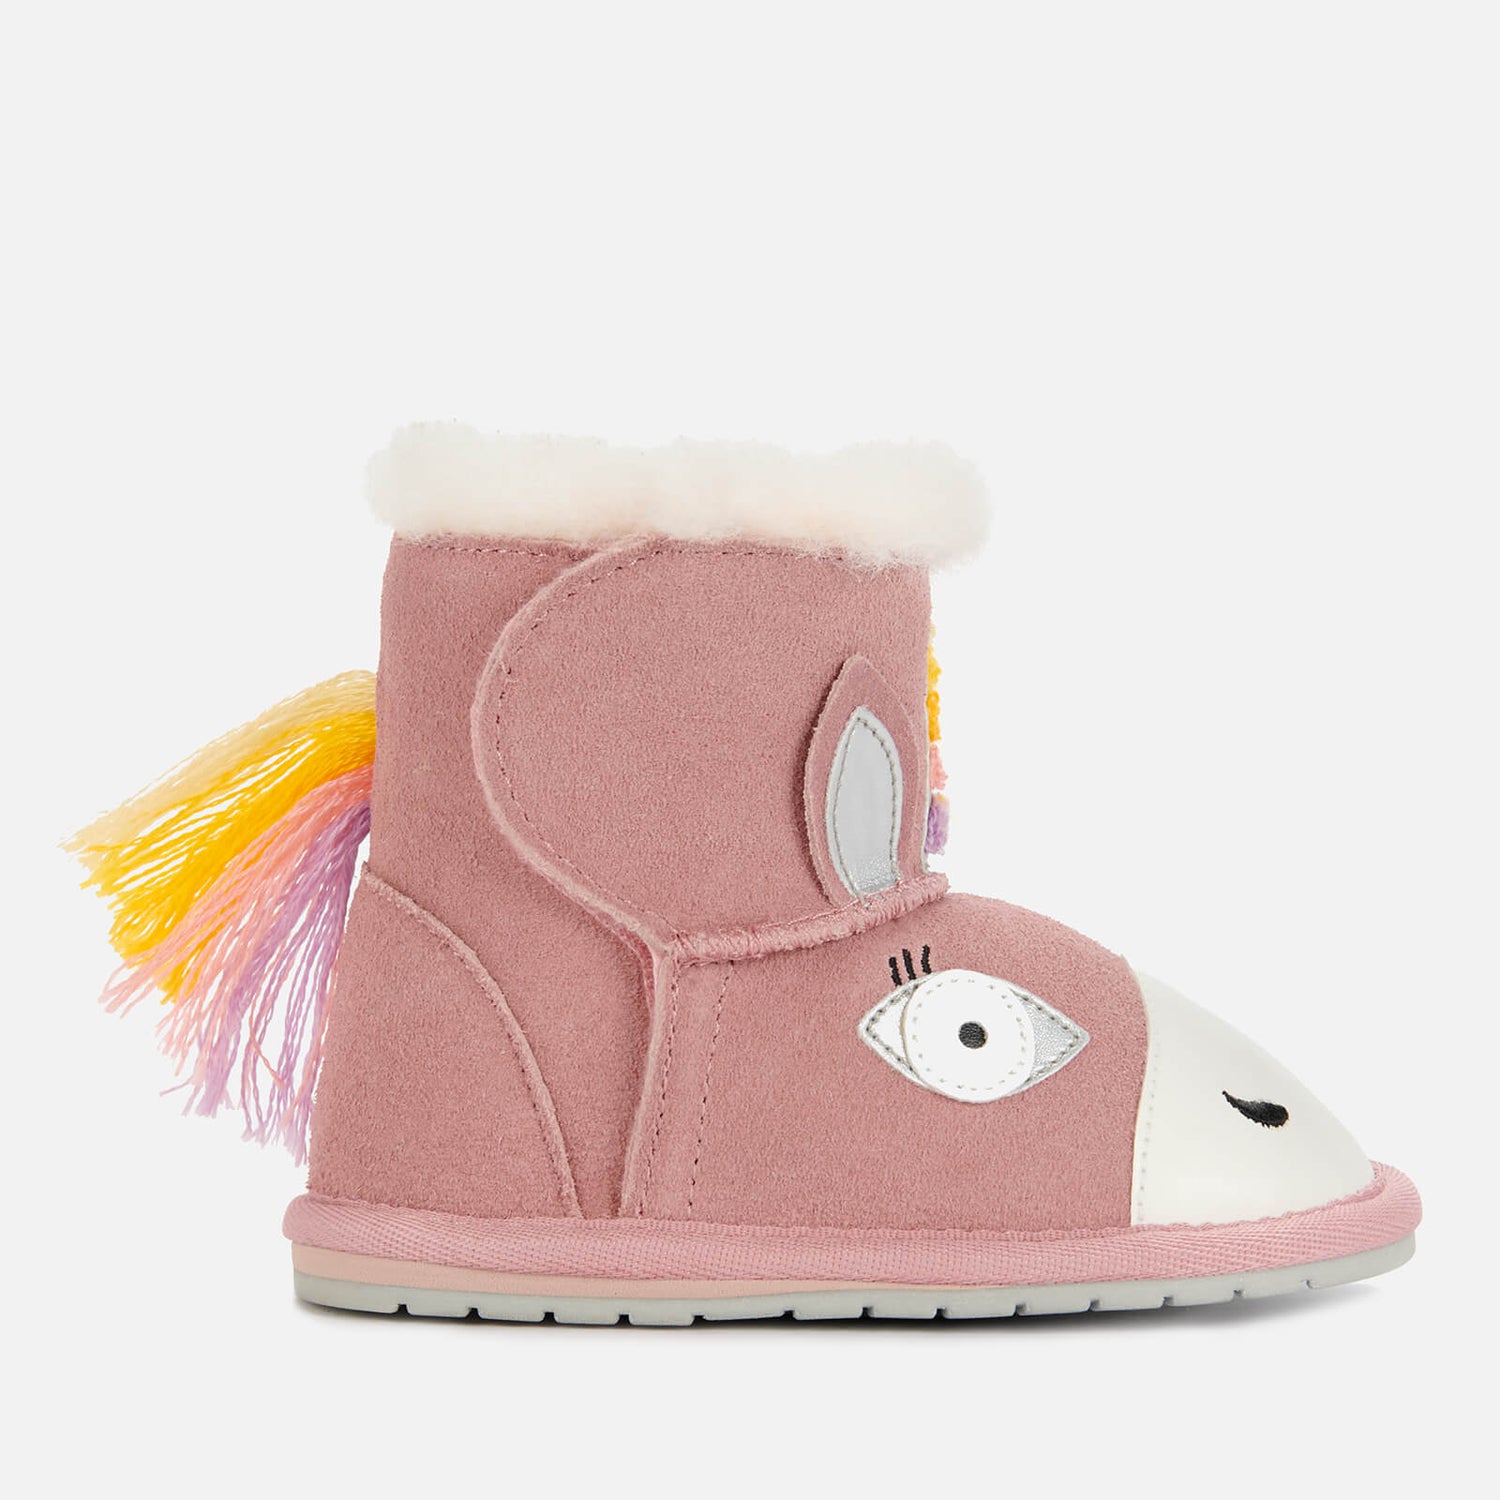 EMU Australia Toddlers' Magical Unicorn Walker Boots - Pale Pink